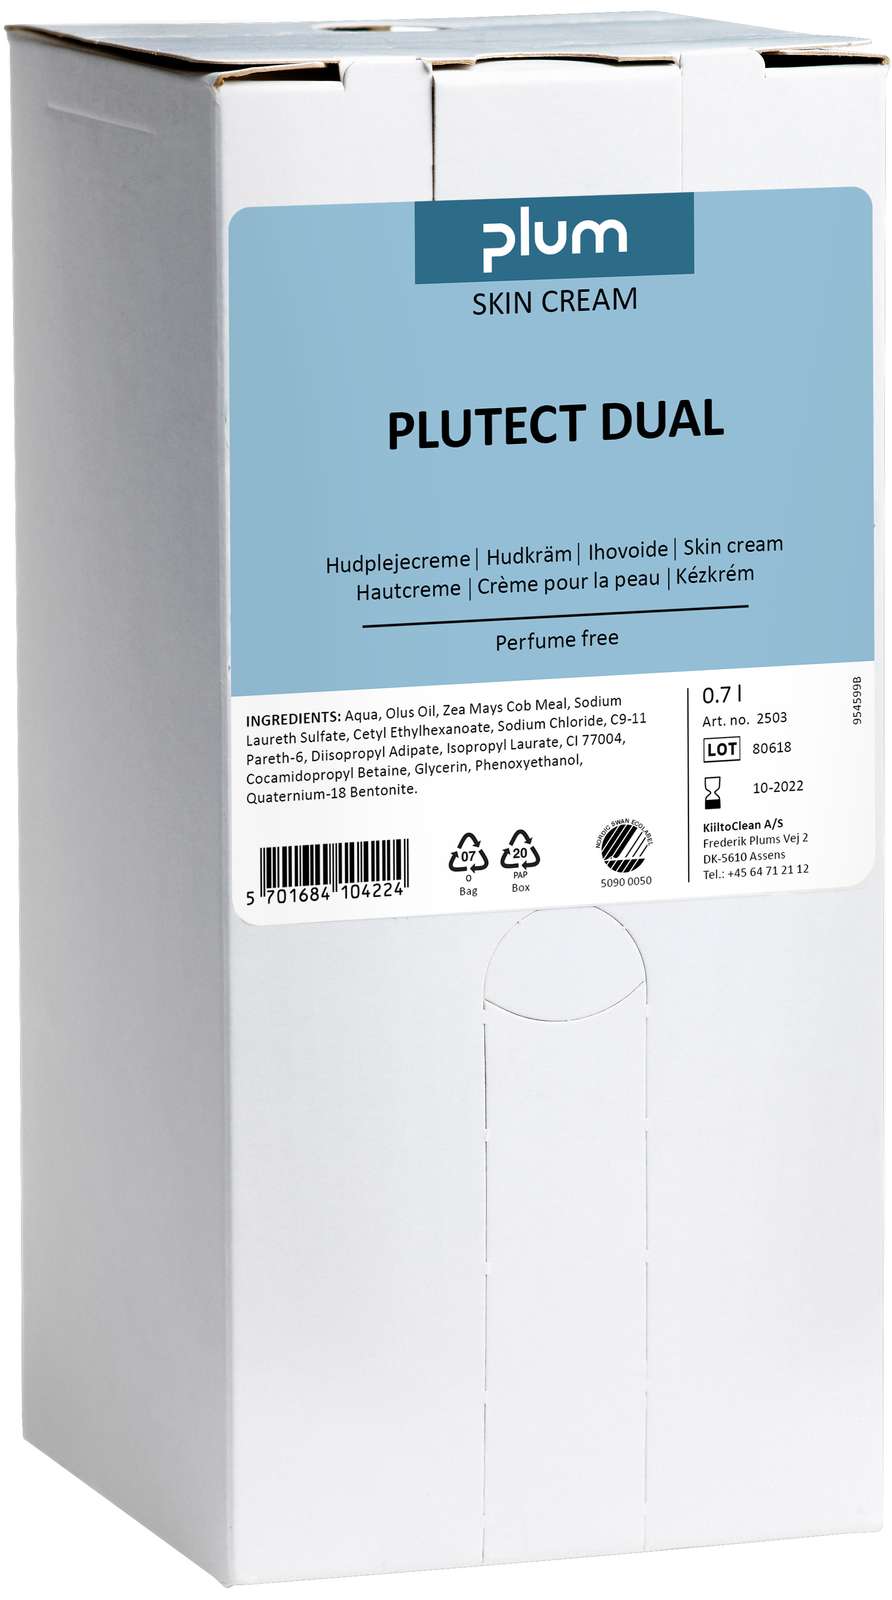 2503 Plum Plutect Dual 0.7L Bag In Box 20231127